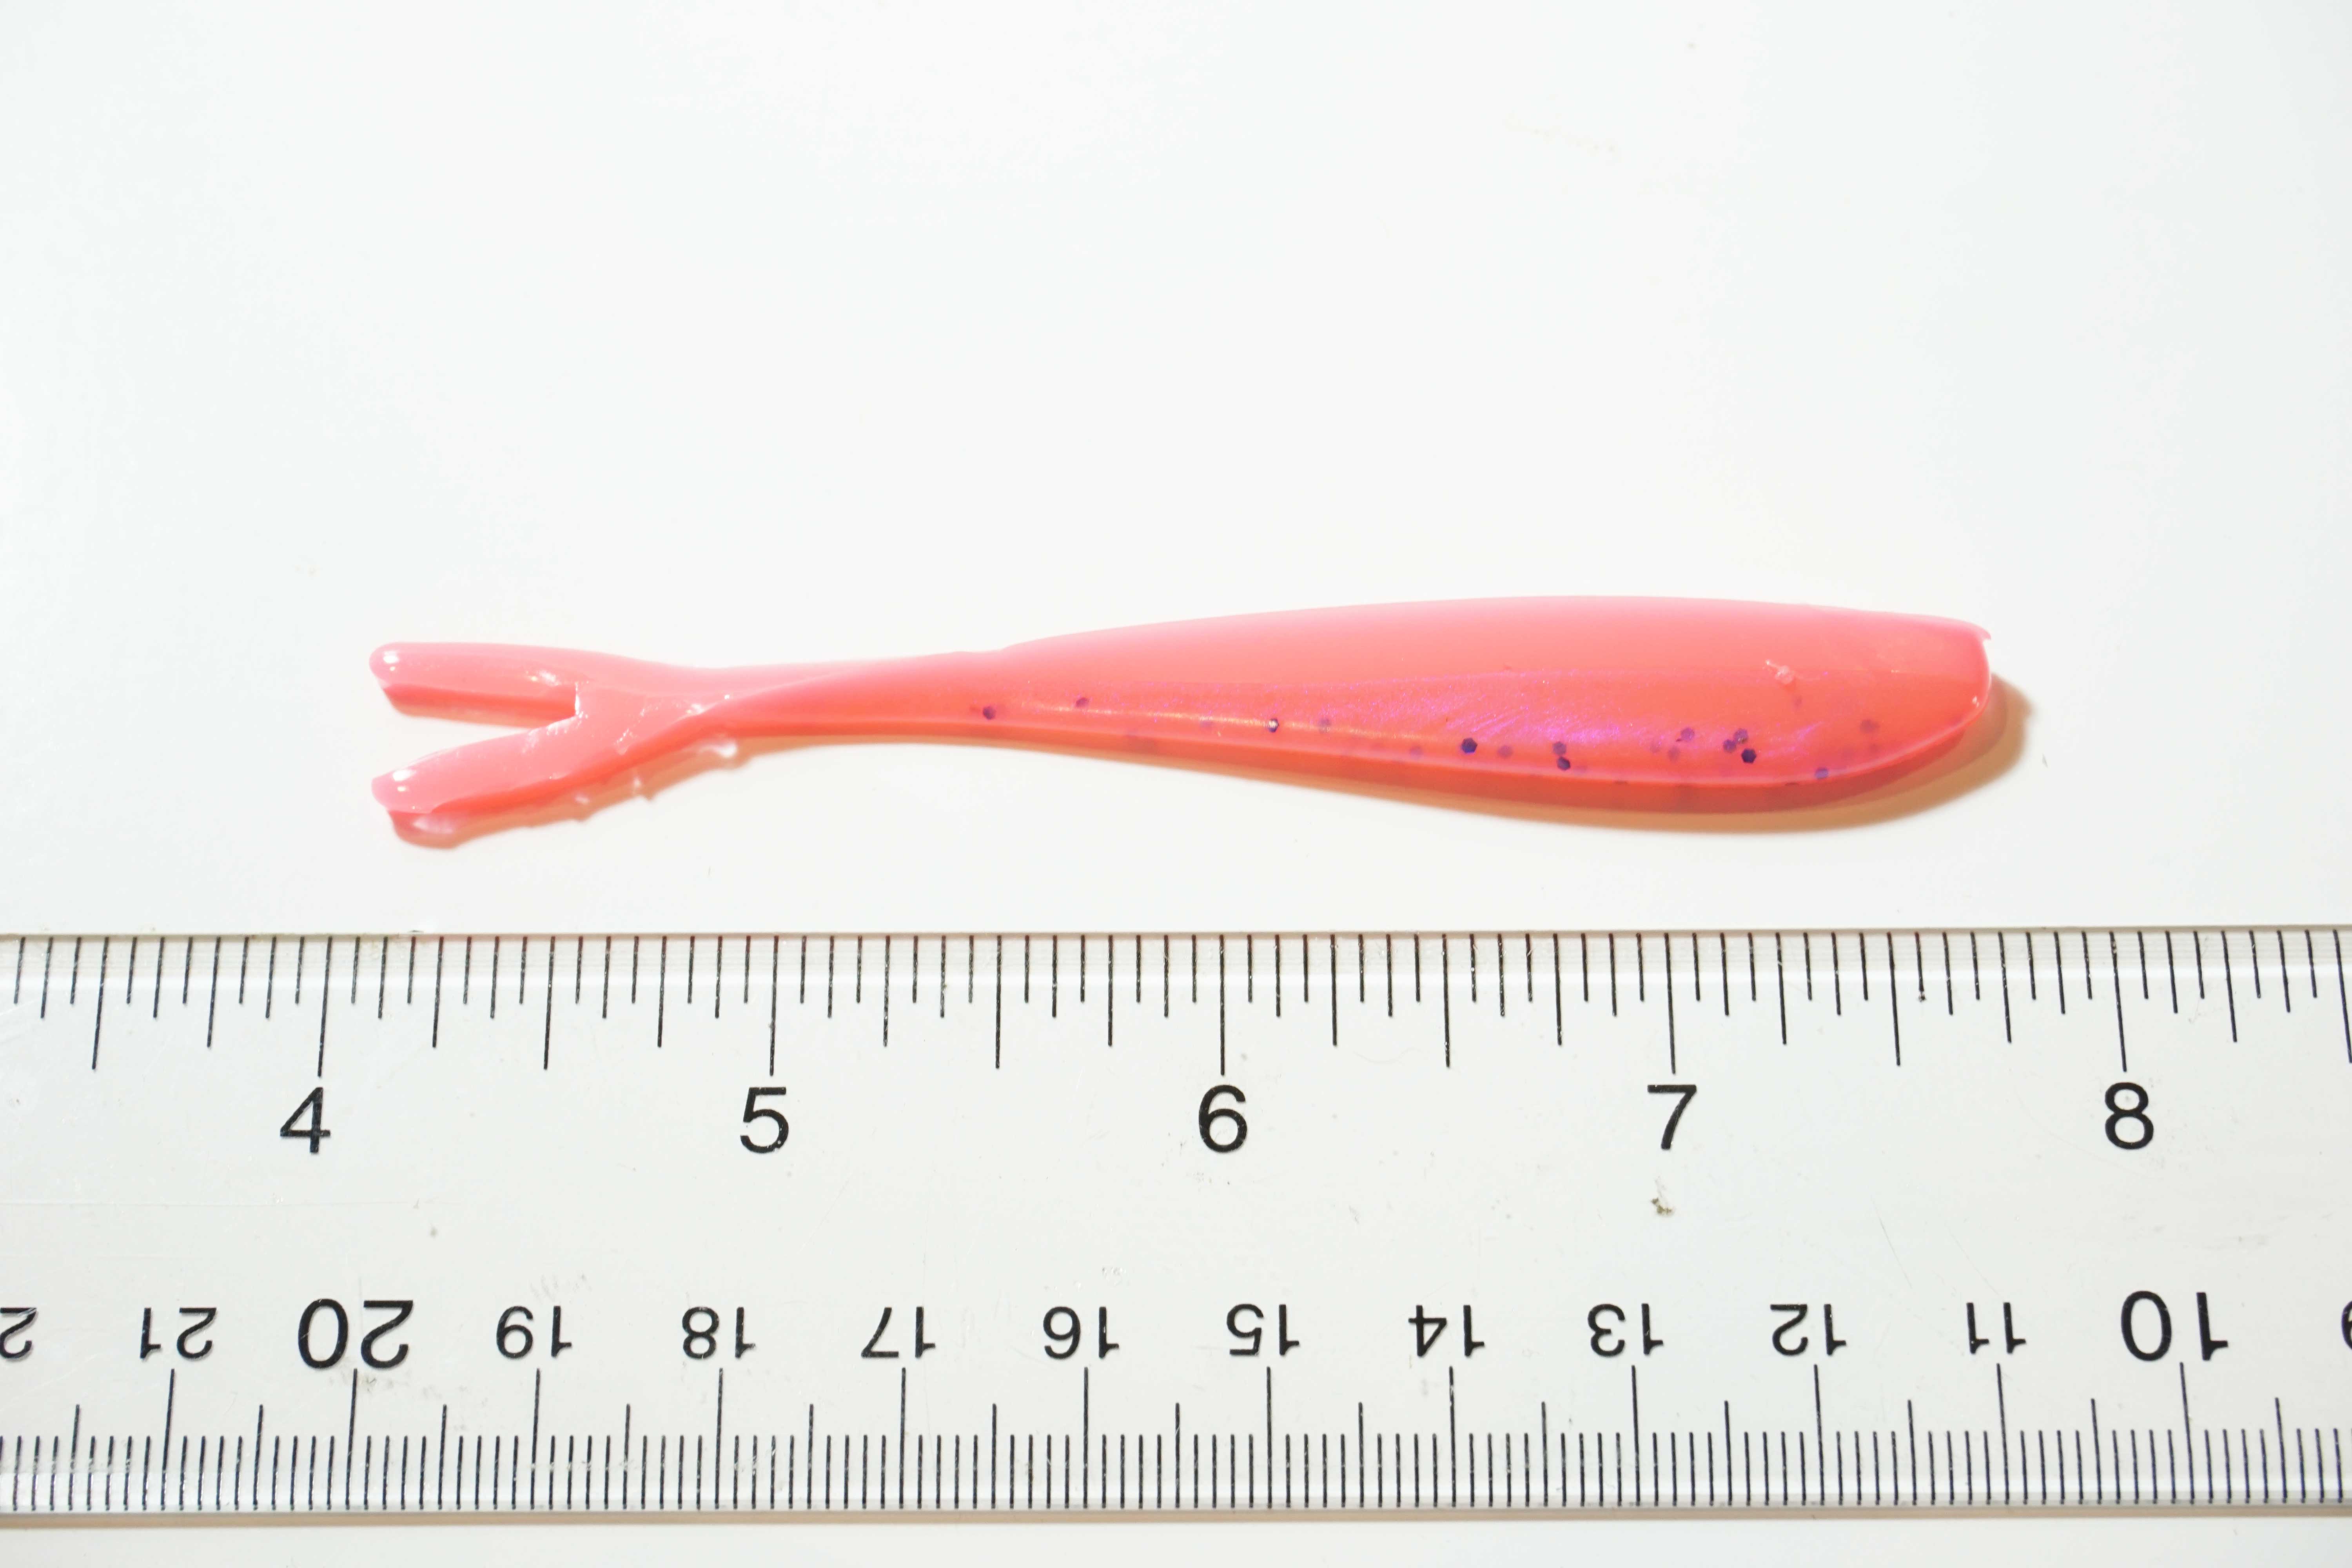 Soft Plastic Split Tail Jerk Bait 4 Pink [CTSB1181BULK] - $20.95